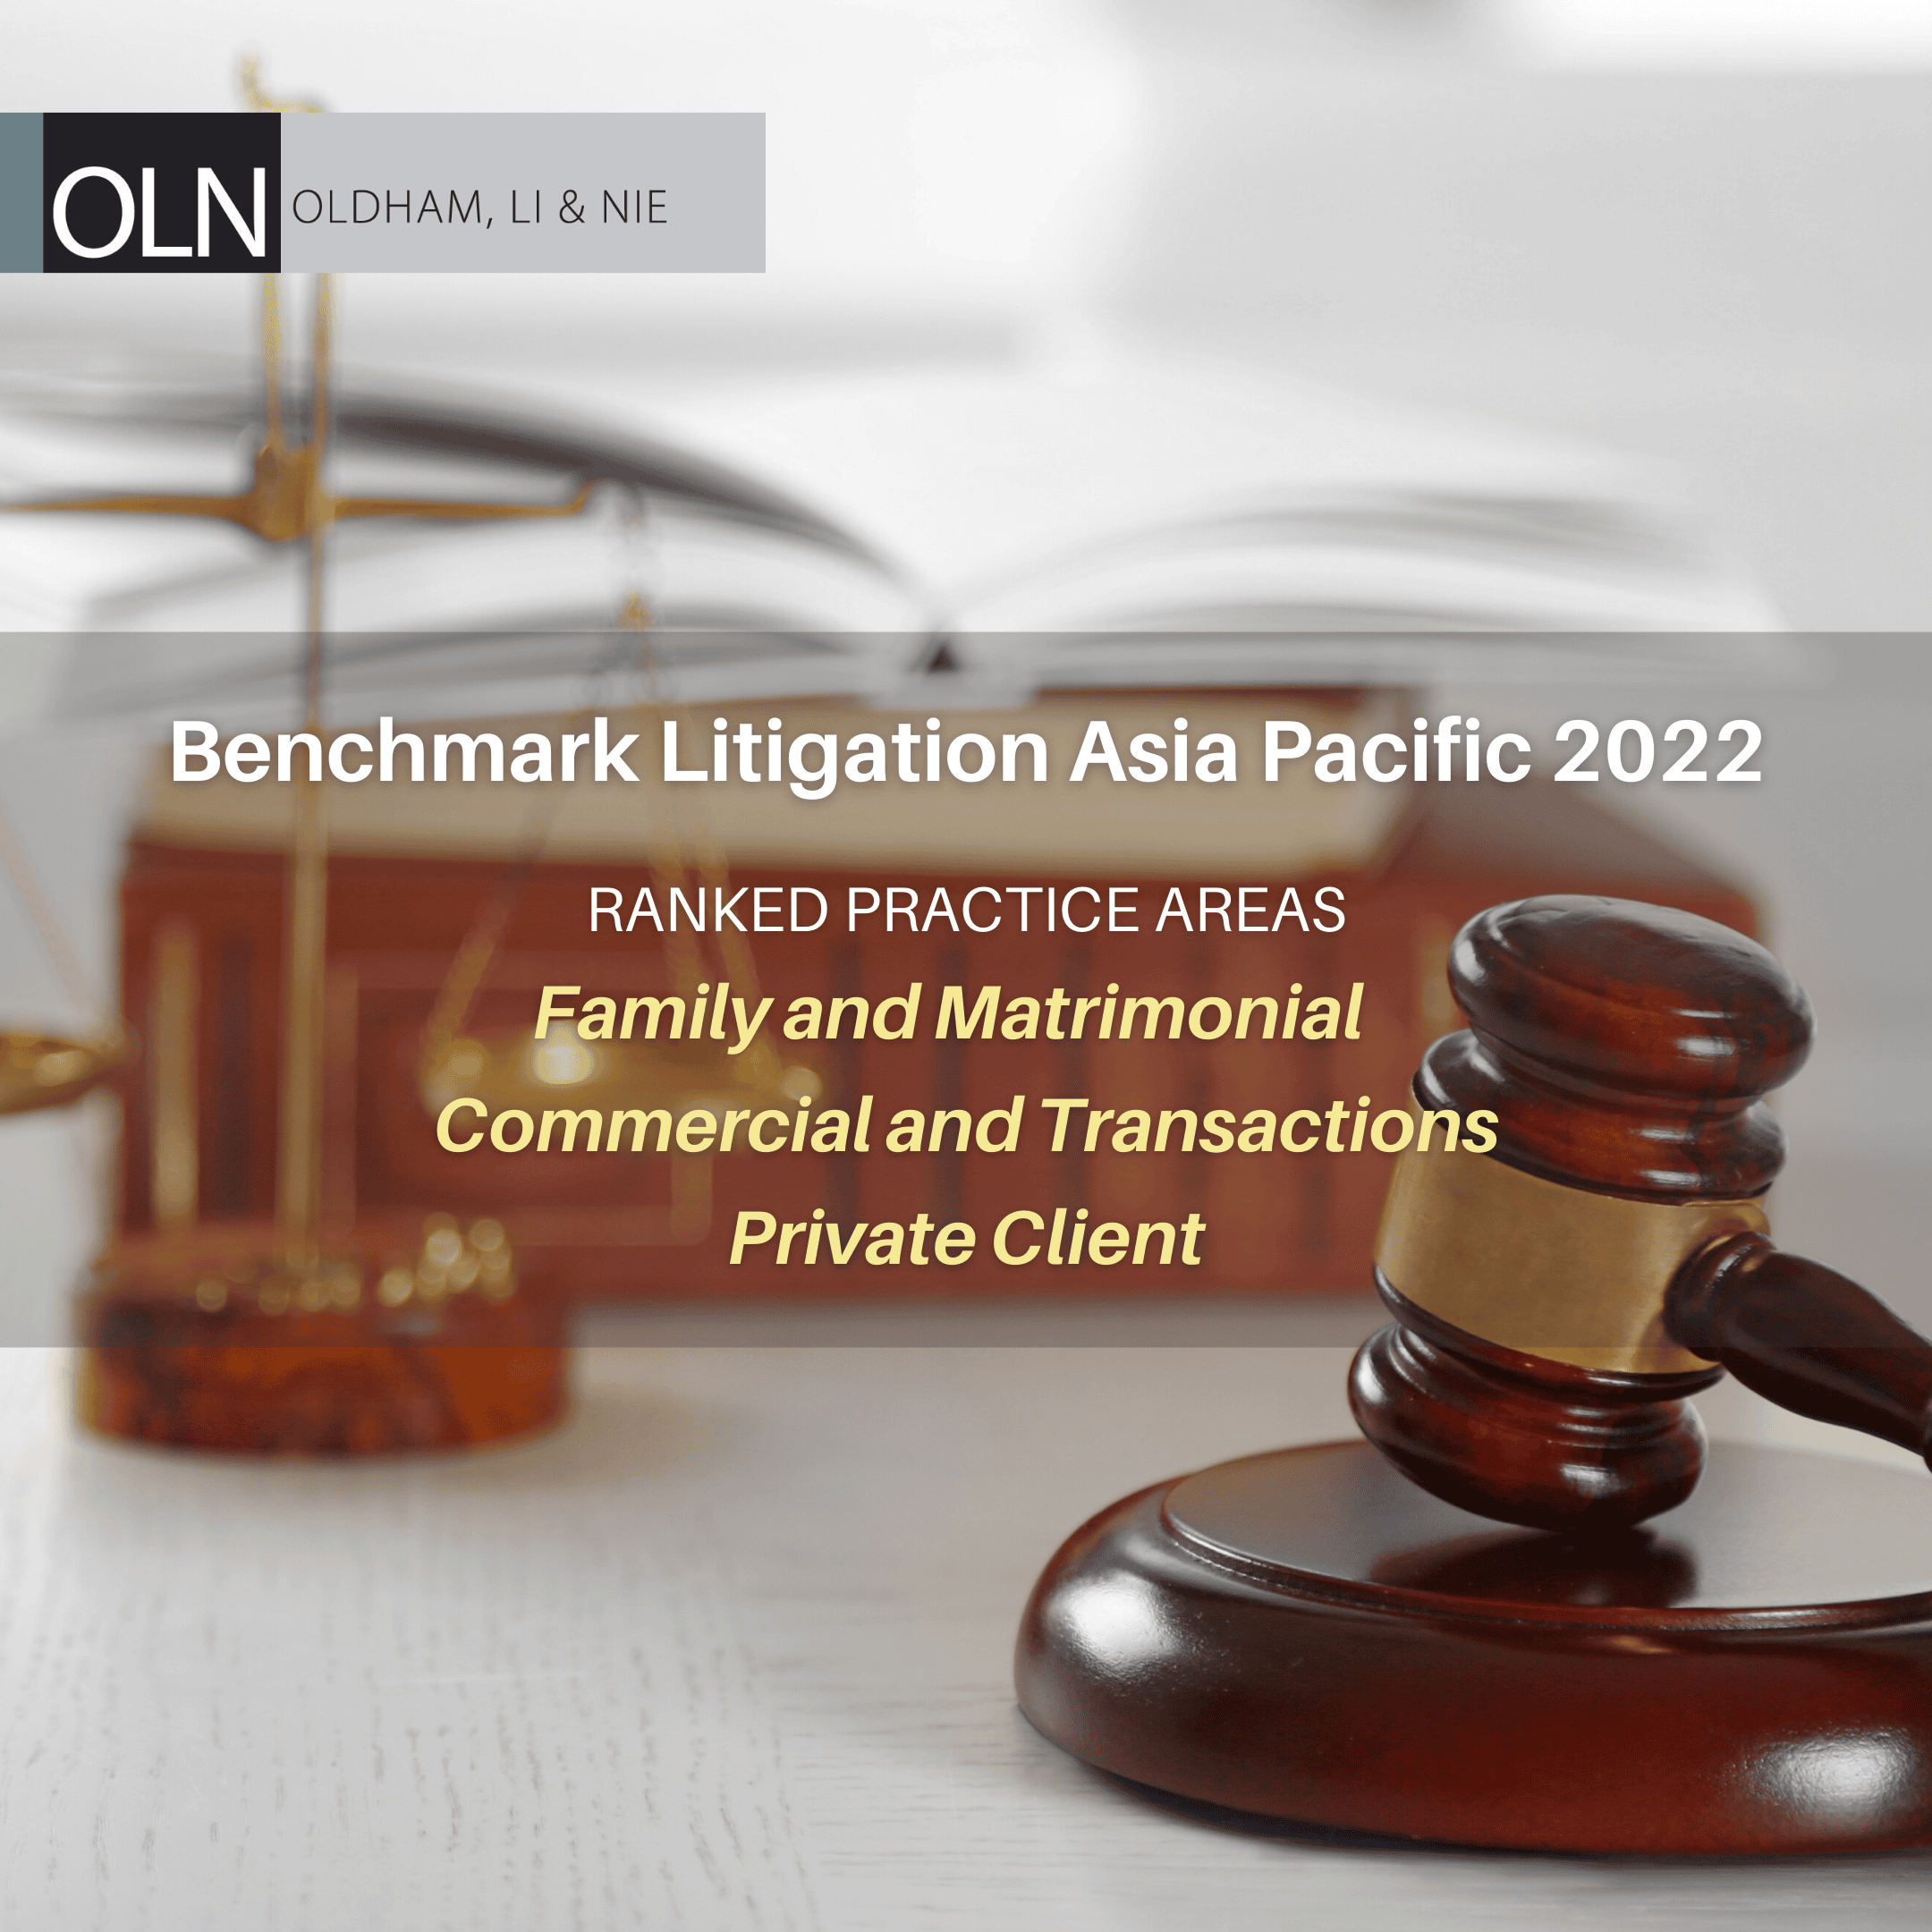 OLN - Benchmark Litigation